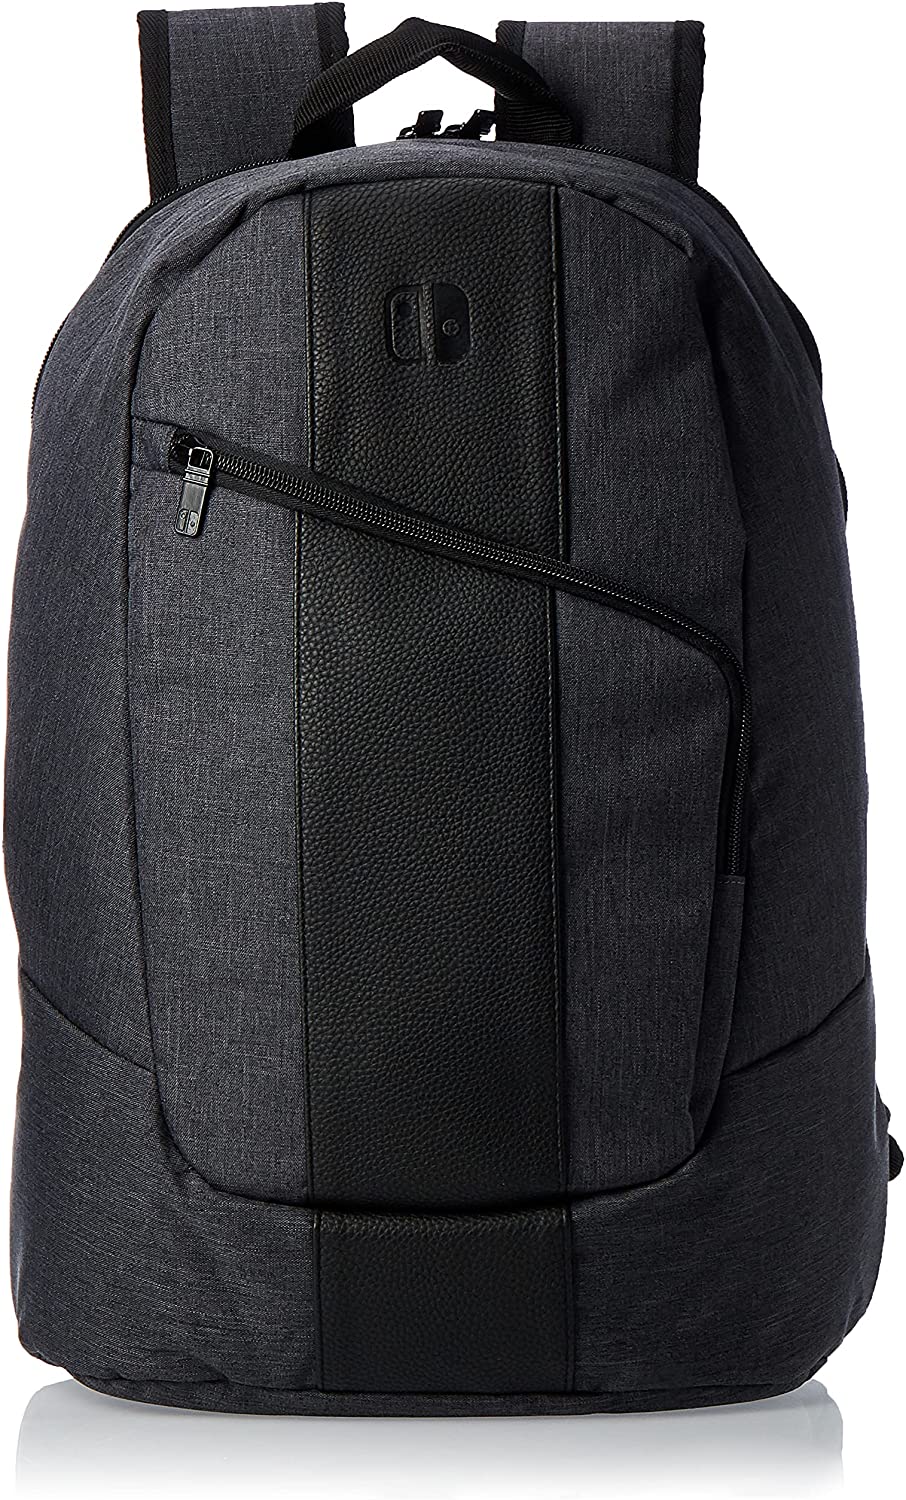 PDP backpack Elite V2 for Nintendo Switch